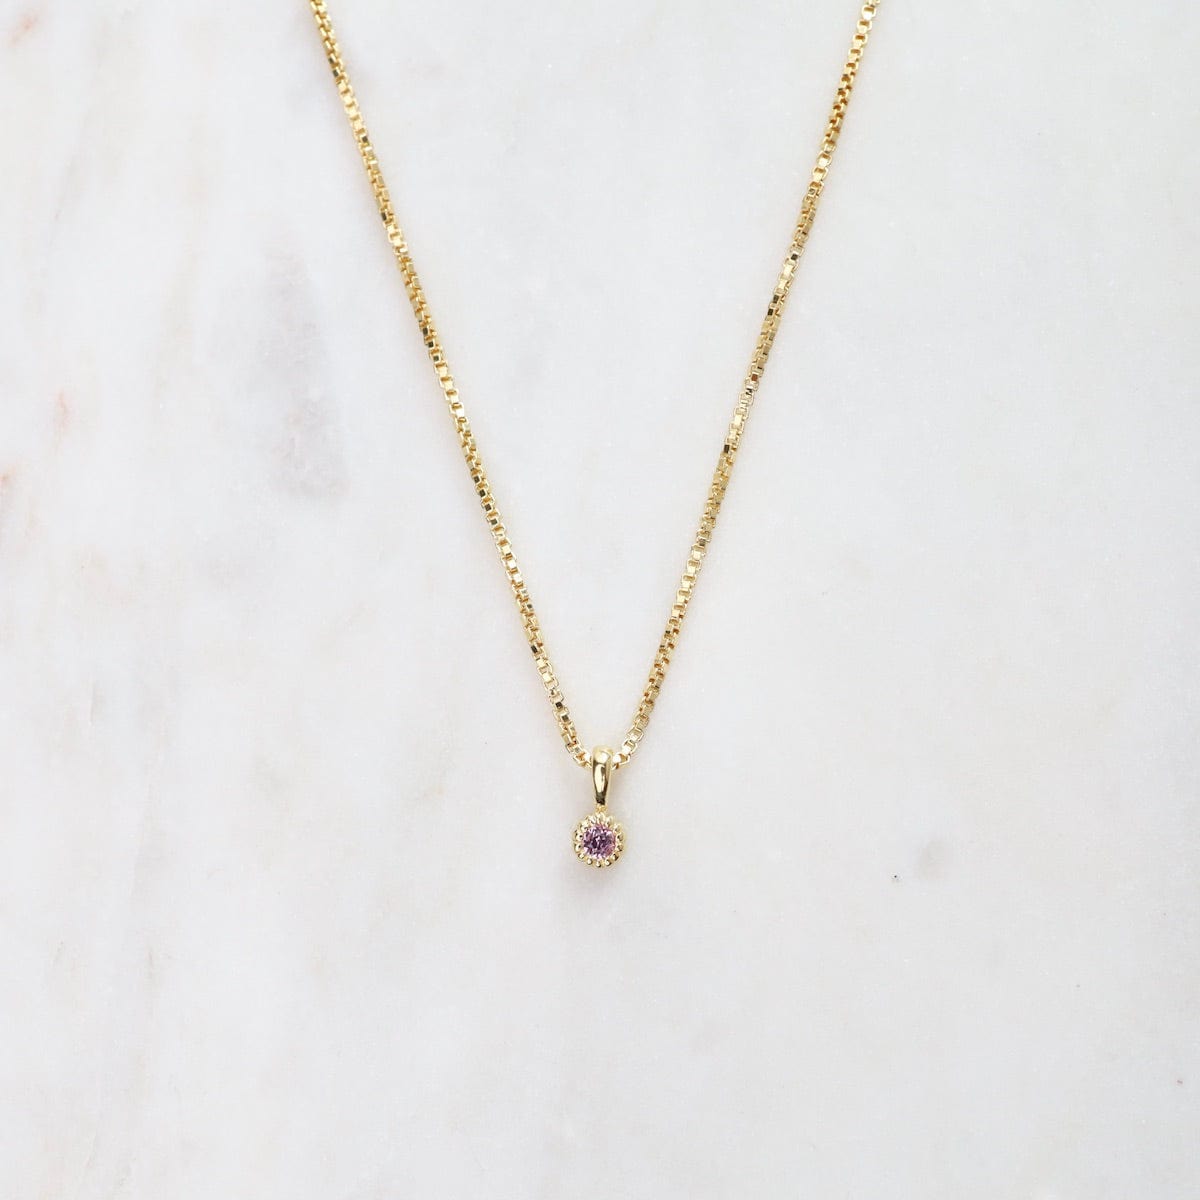 NKL-VRM Pink Sapphire with Milgrain Edge Necklace - Gold Vermeil